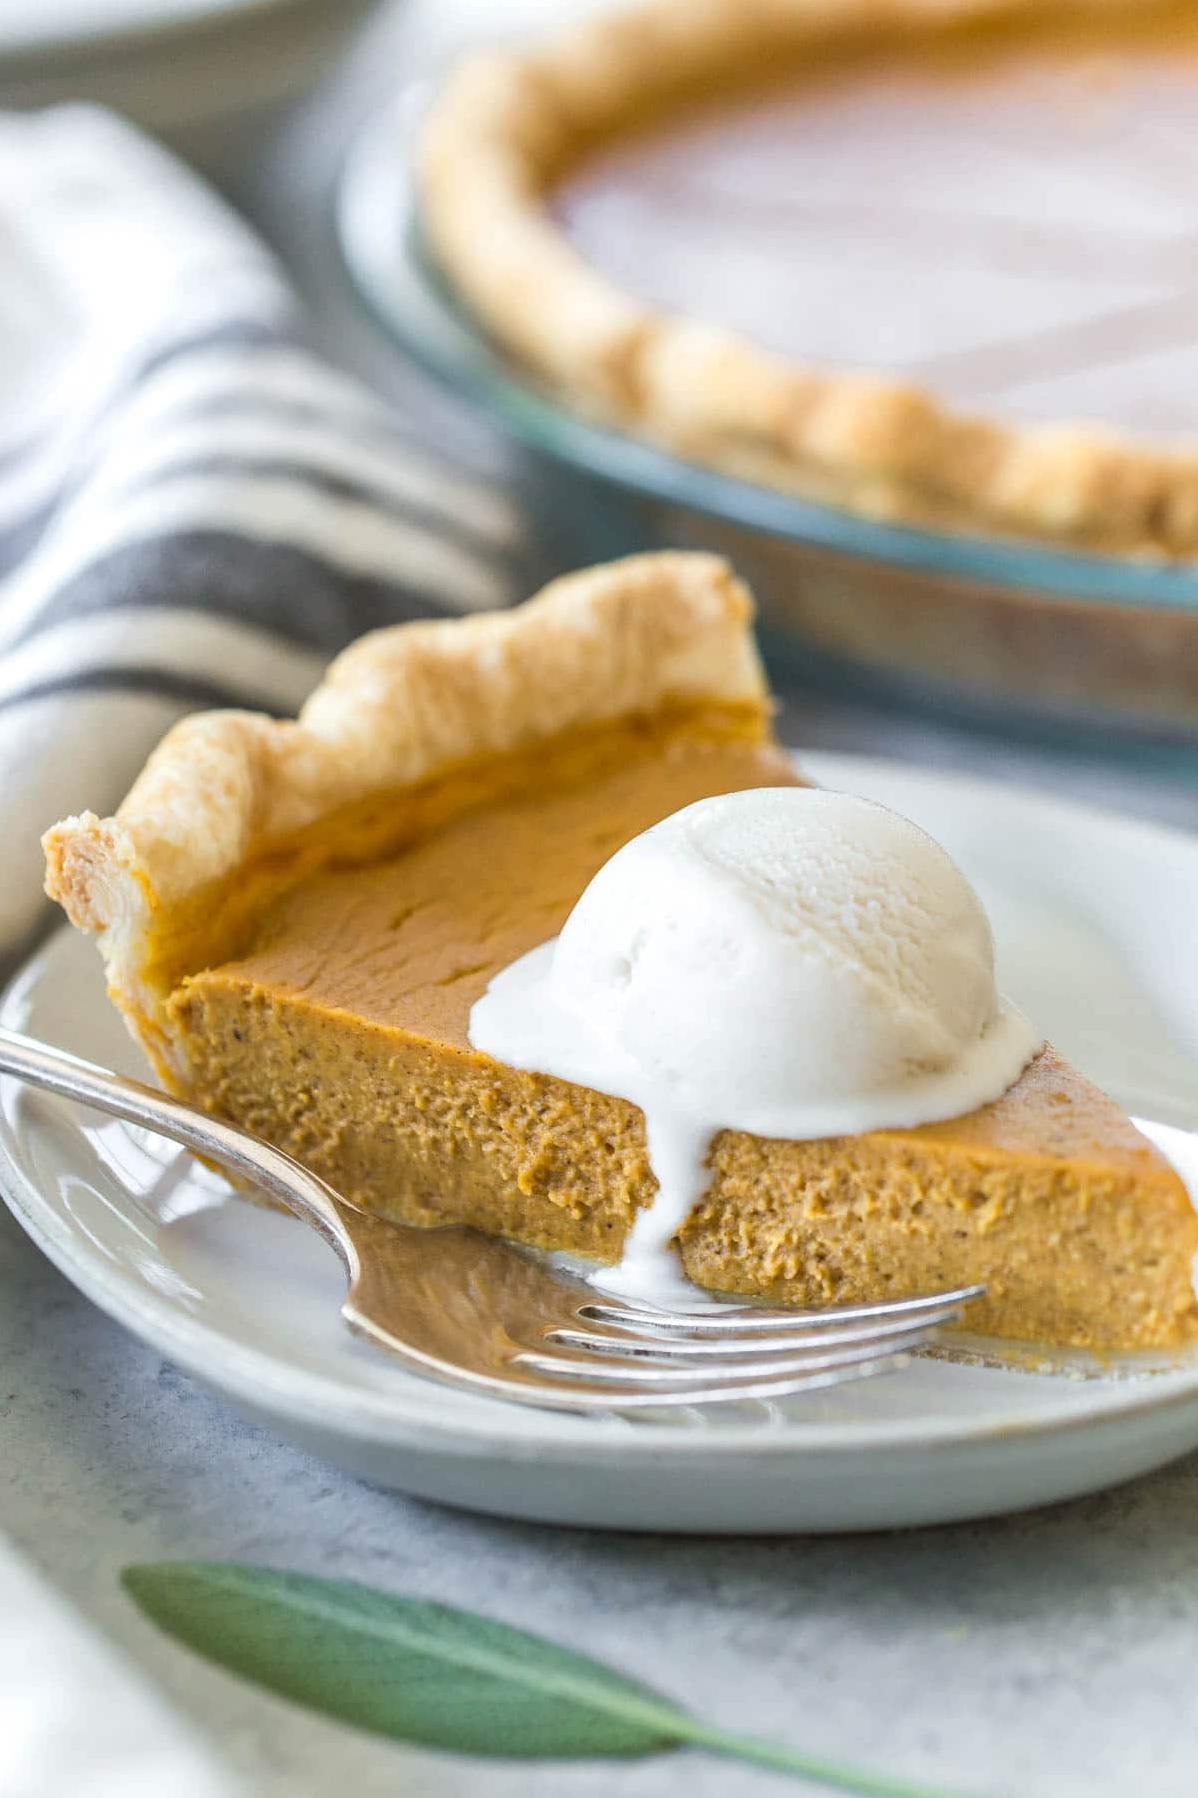  Trust me, even non-vegans will love this pumpkin pie.